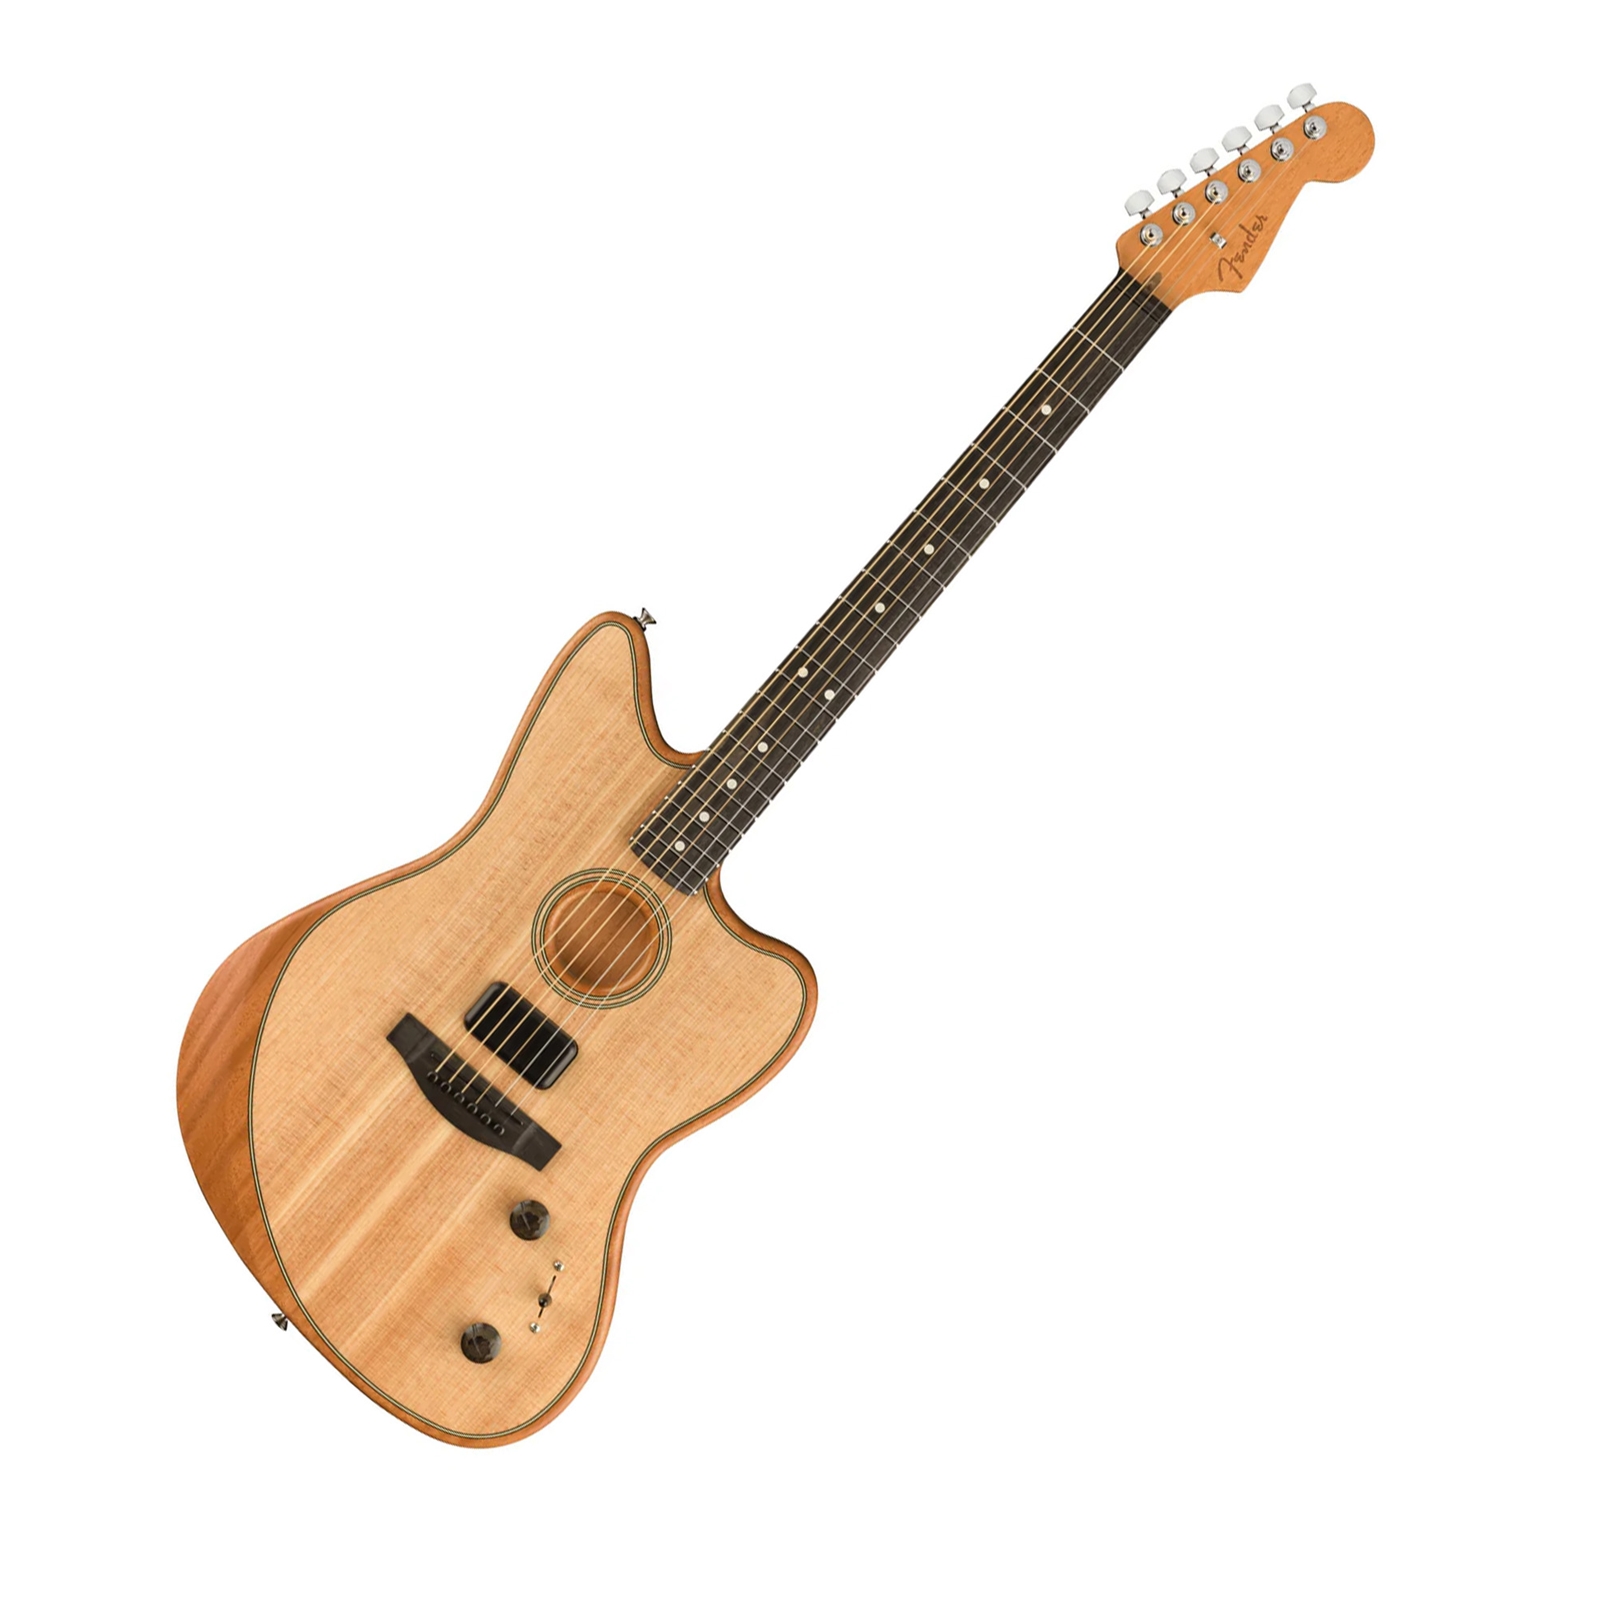 Fender Acoustasonic Jazzmaster Acoustic Electric Guitar